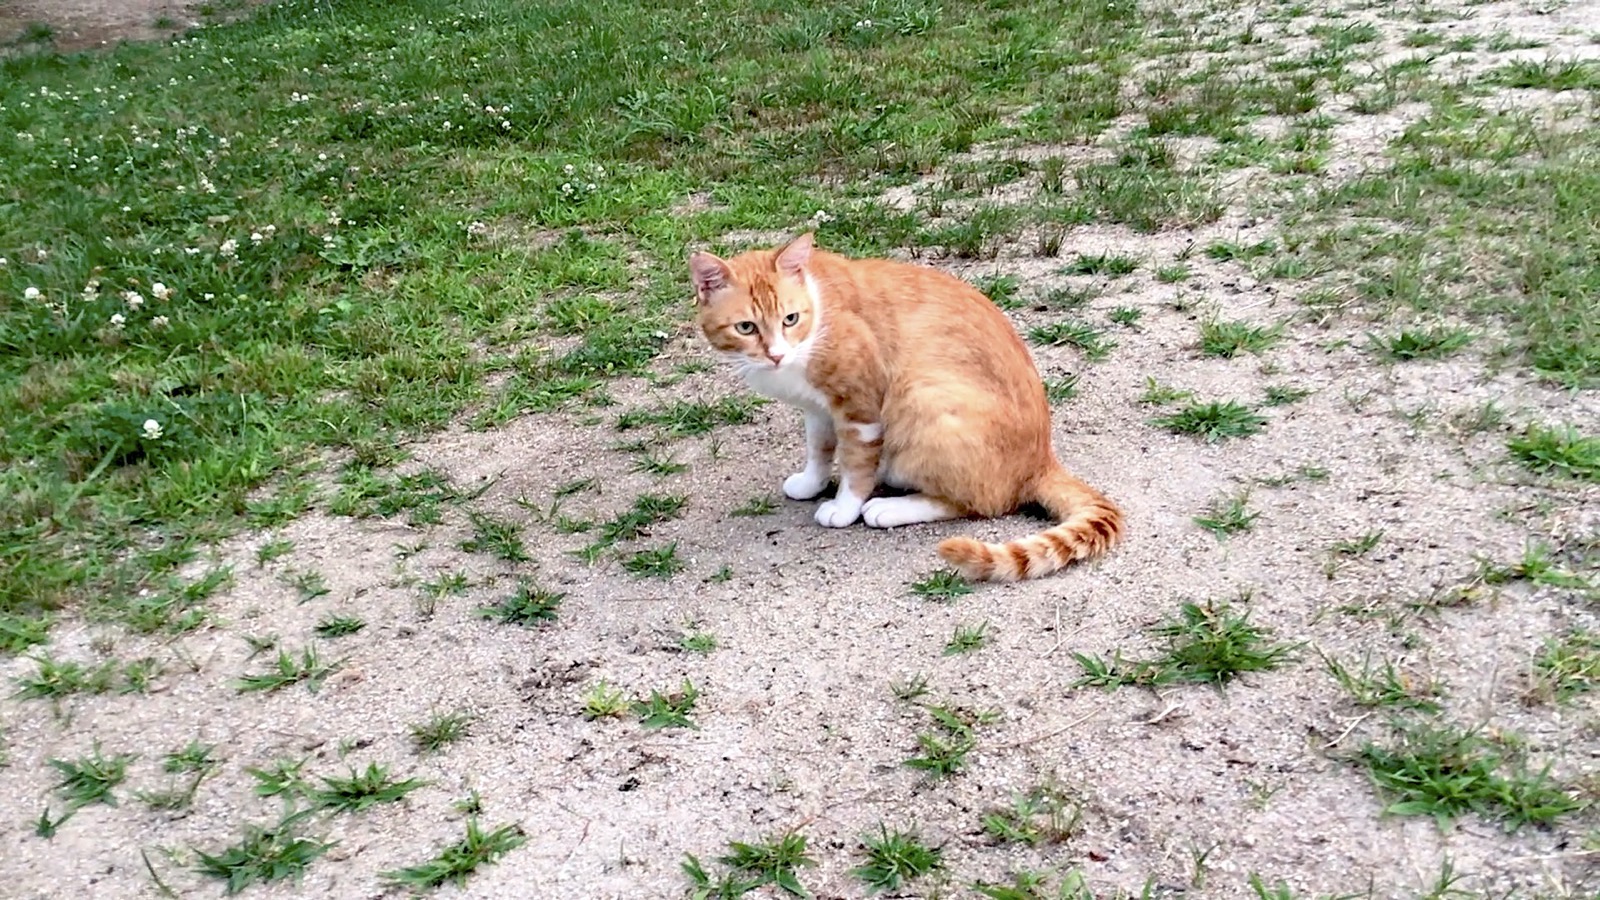 Little and slim orange ticked tabby cat on the baseball ground